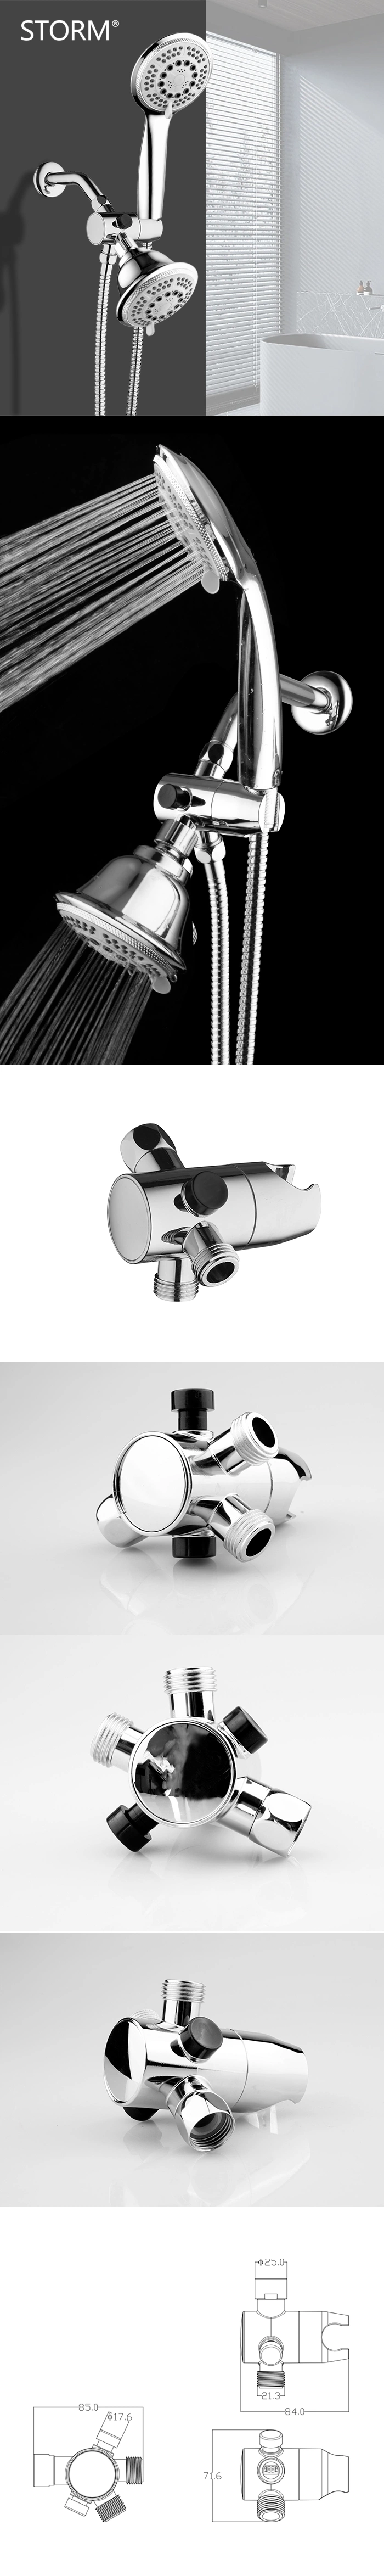 3 Way ABS Adjustable Hand Shower Water Diverter with Bracket /Holder